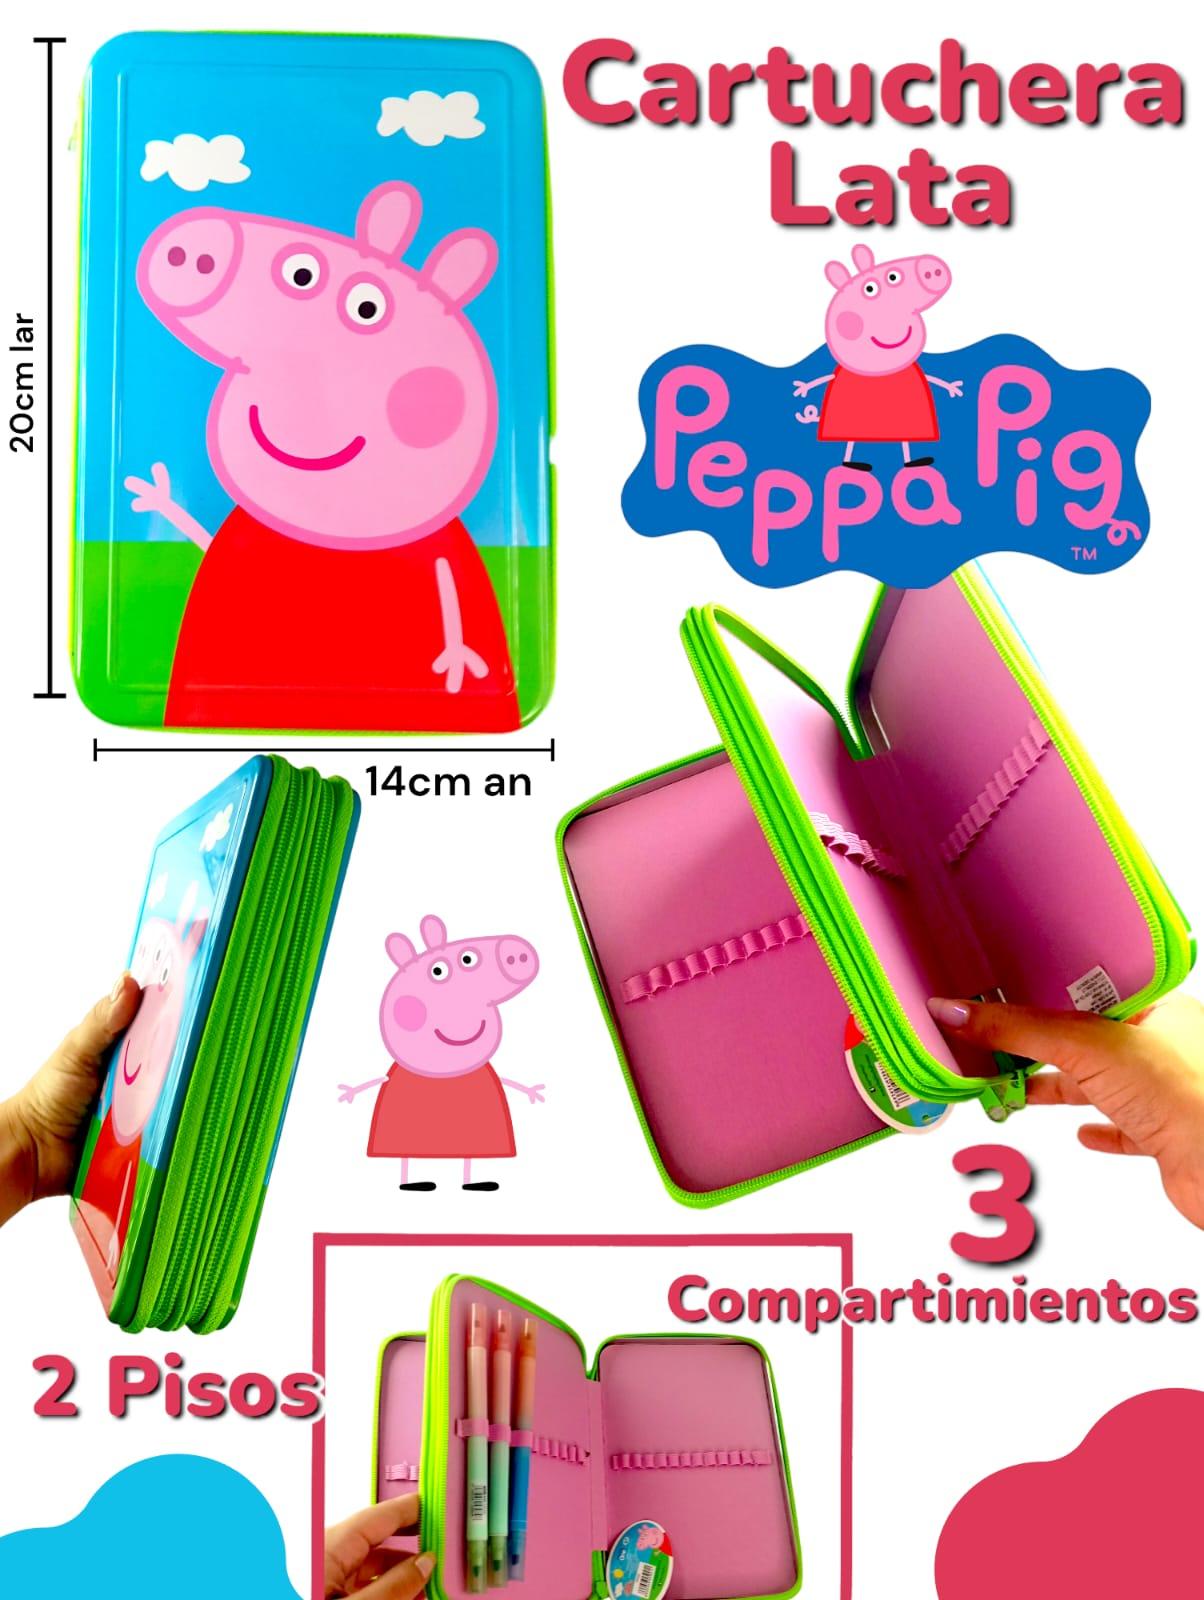 Cartuchera Lata PEPPA PIG 2 Pisos 